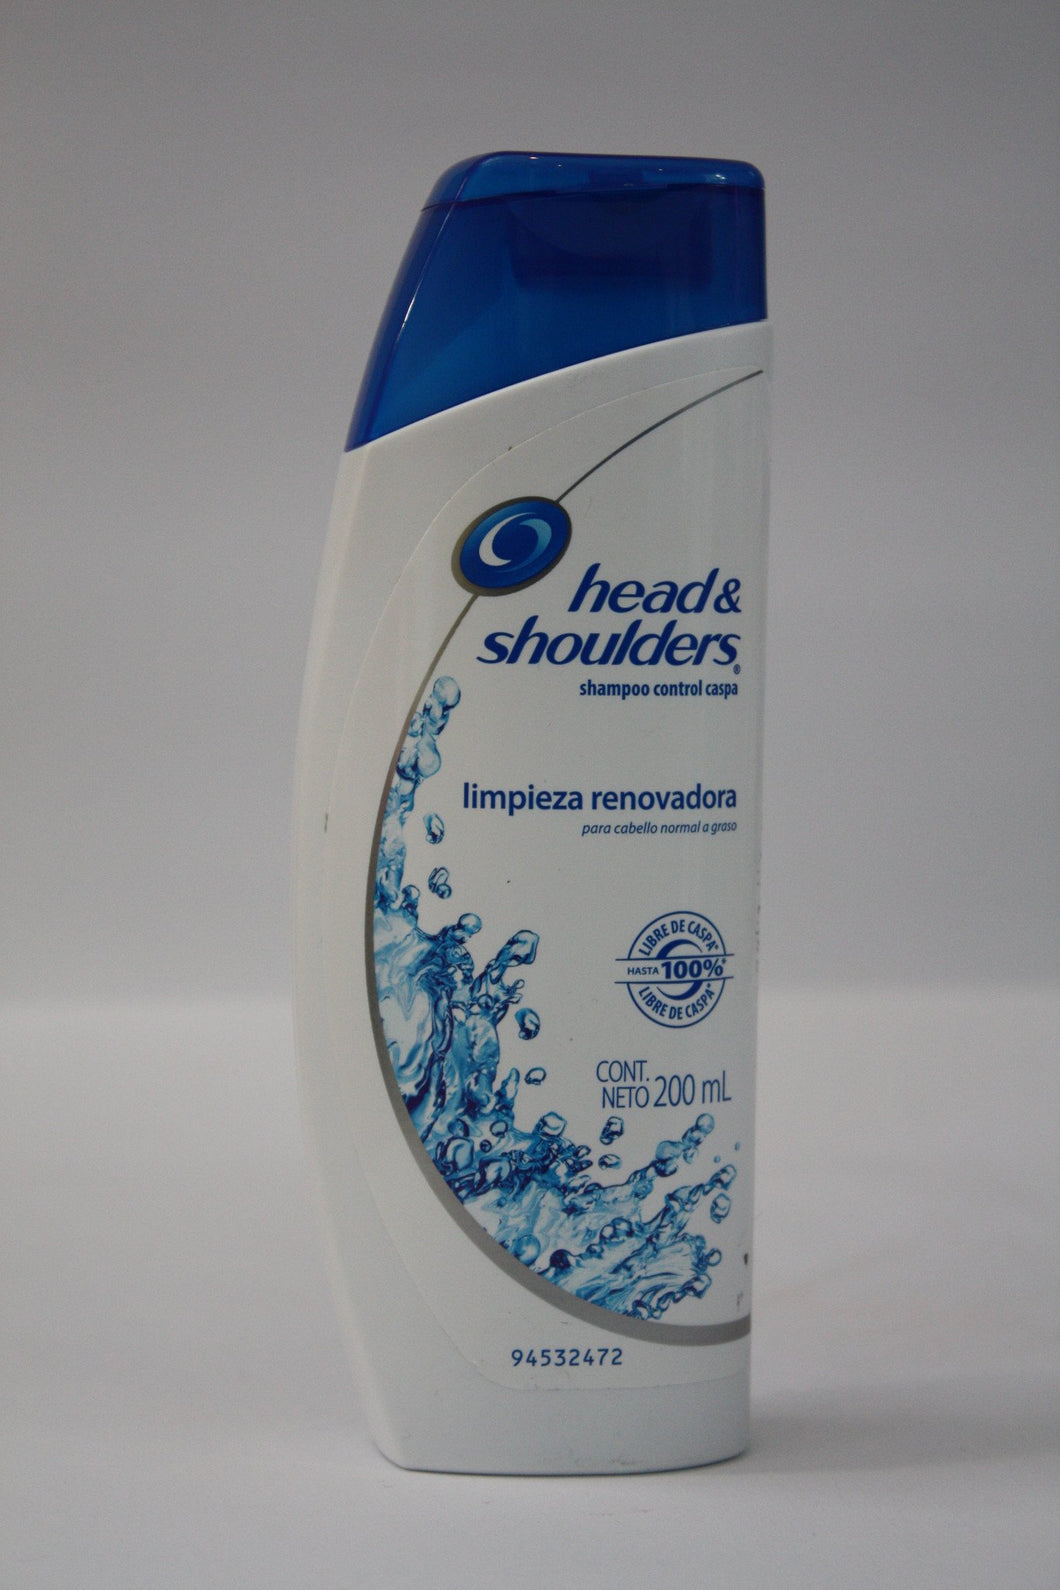 Media Caja Shampoo Head & Shoulders Limpieza Renovadora de 180 ml con 6 piezas - Procter & Gamble-Shampoo-Procter & Gamble-7500435019958-MayoreoTotal